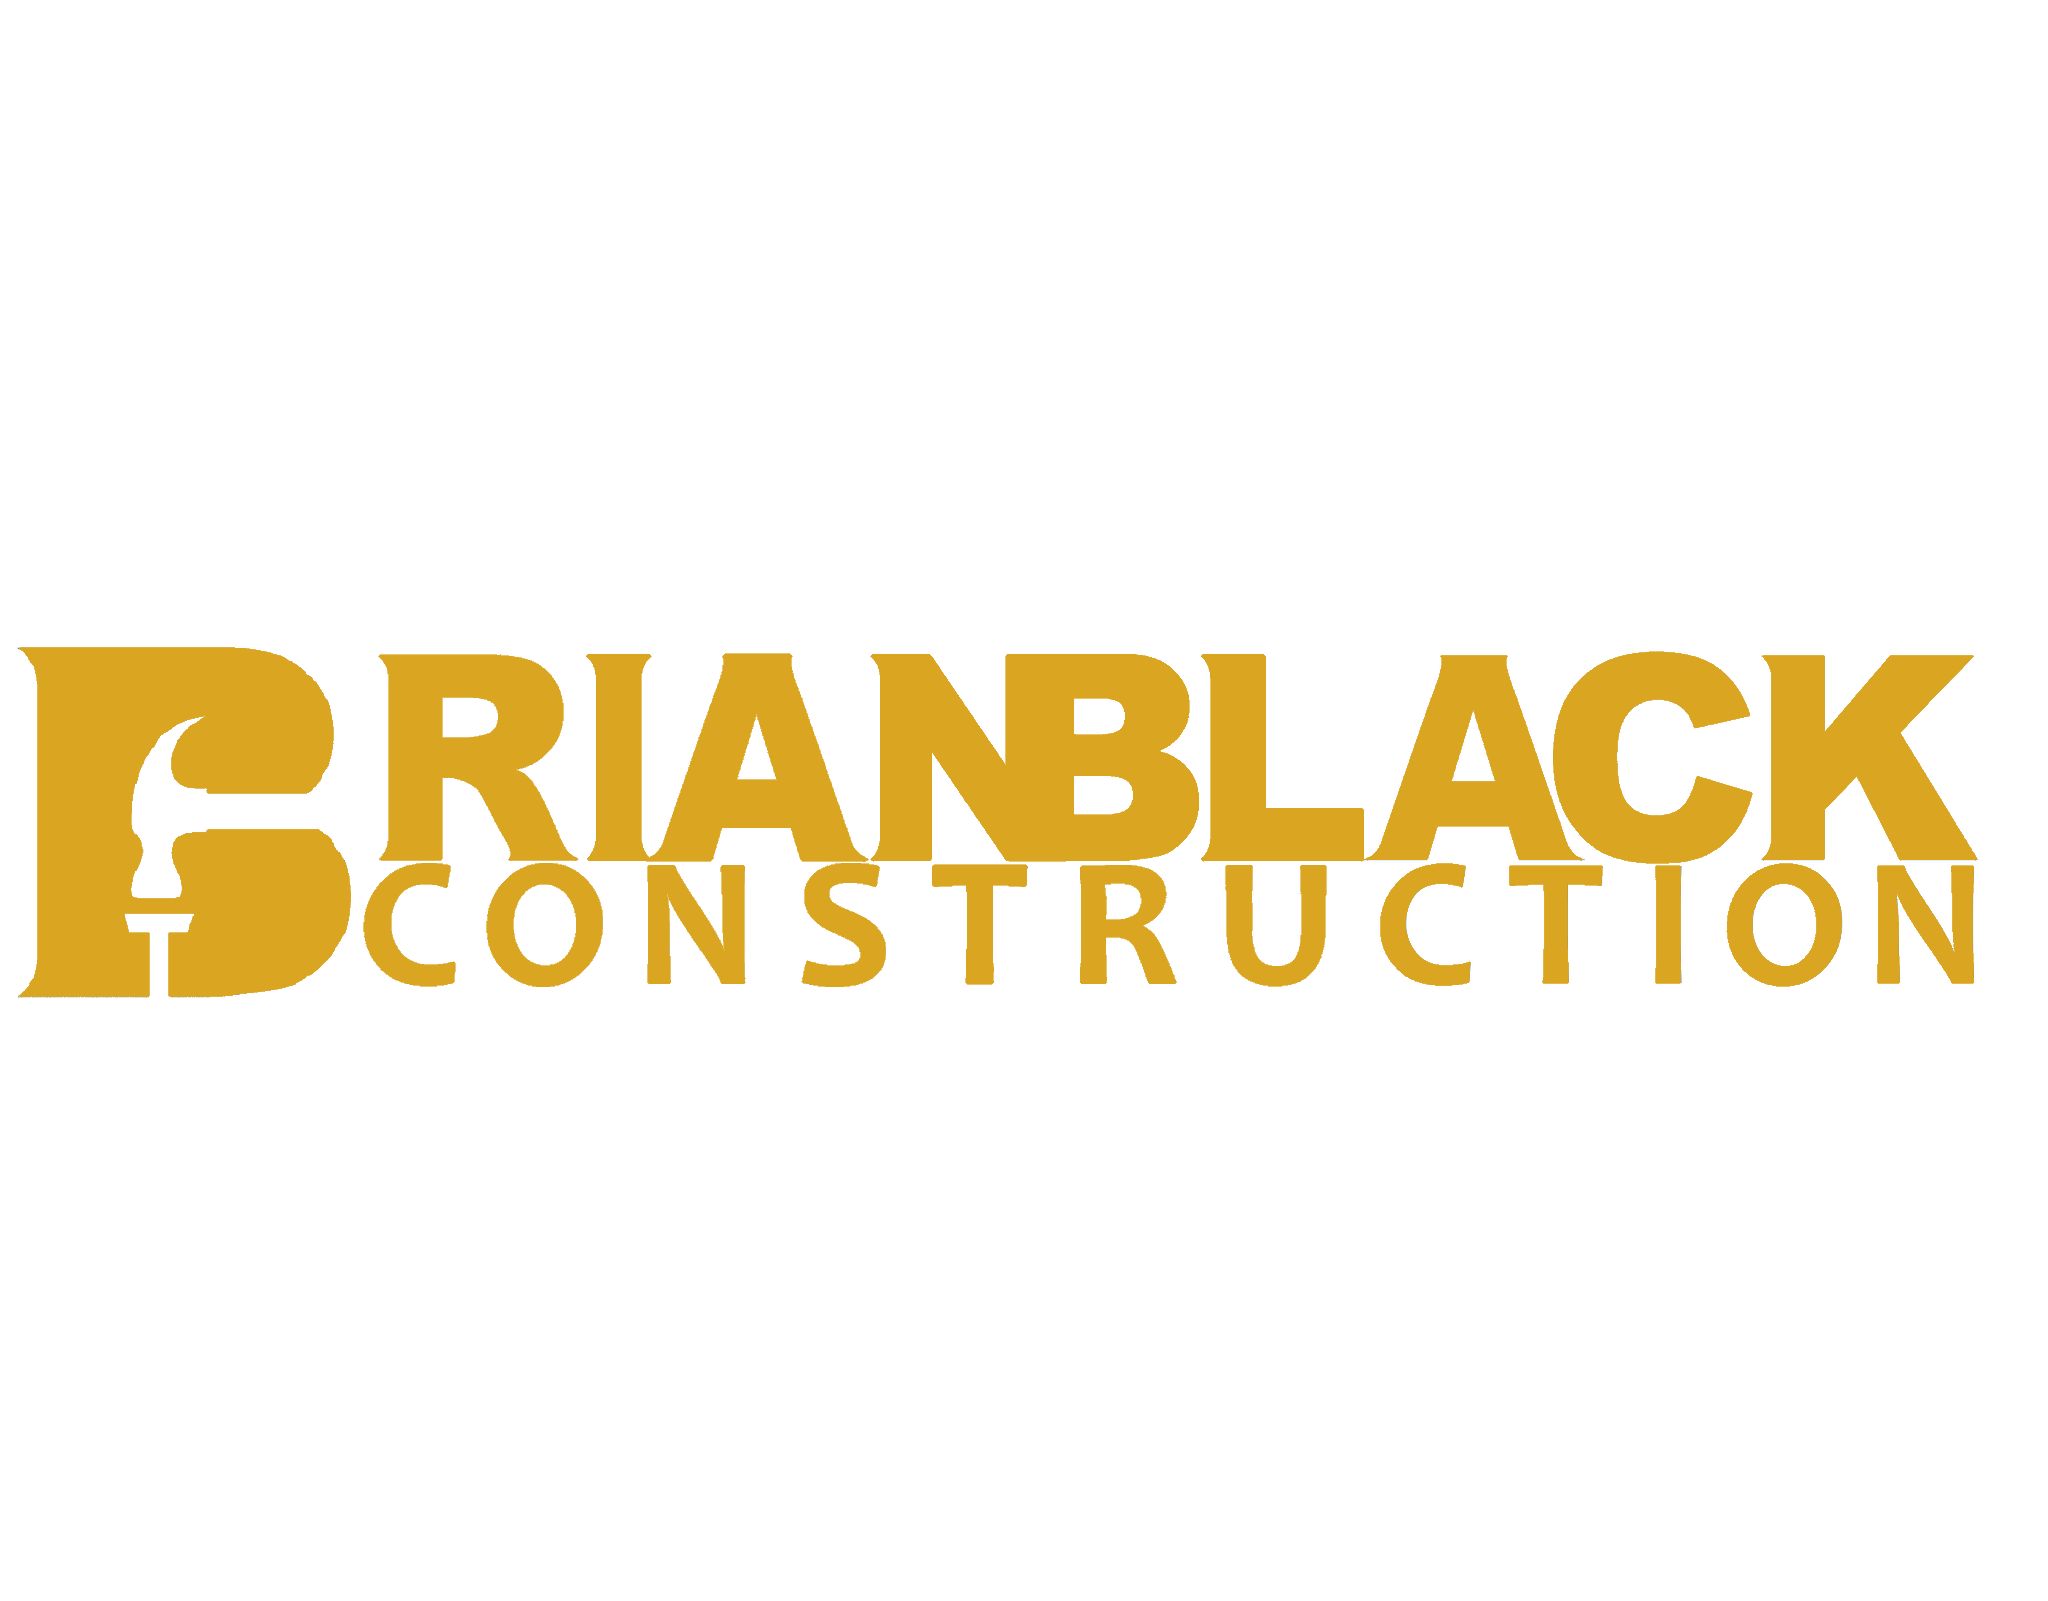 Brian Black Construction